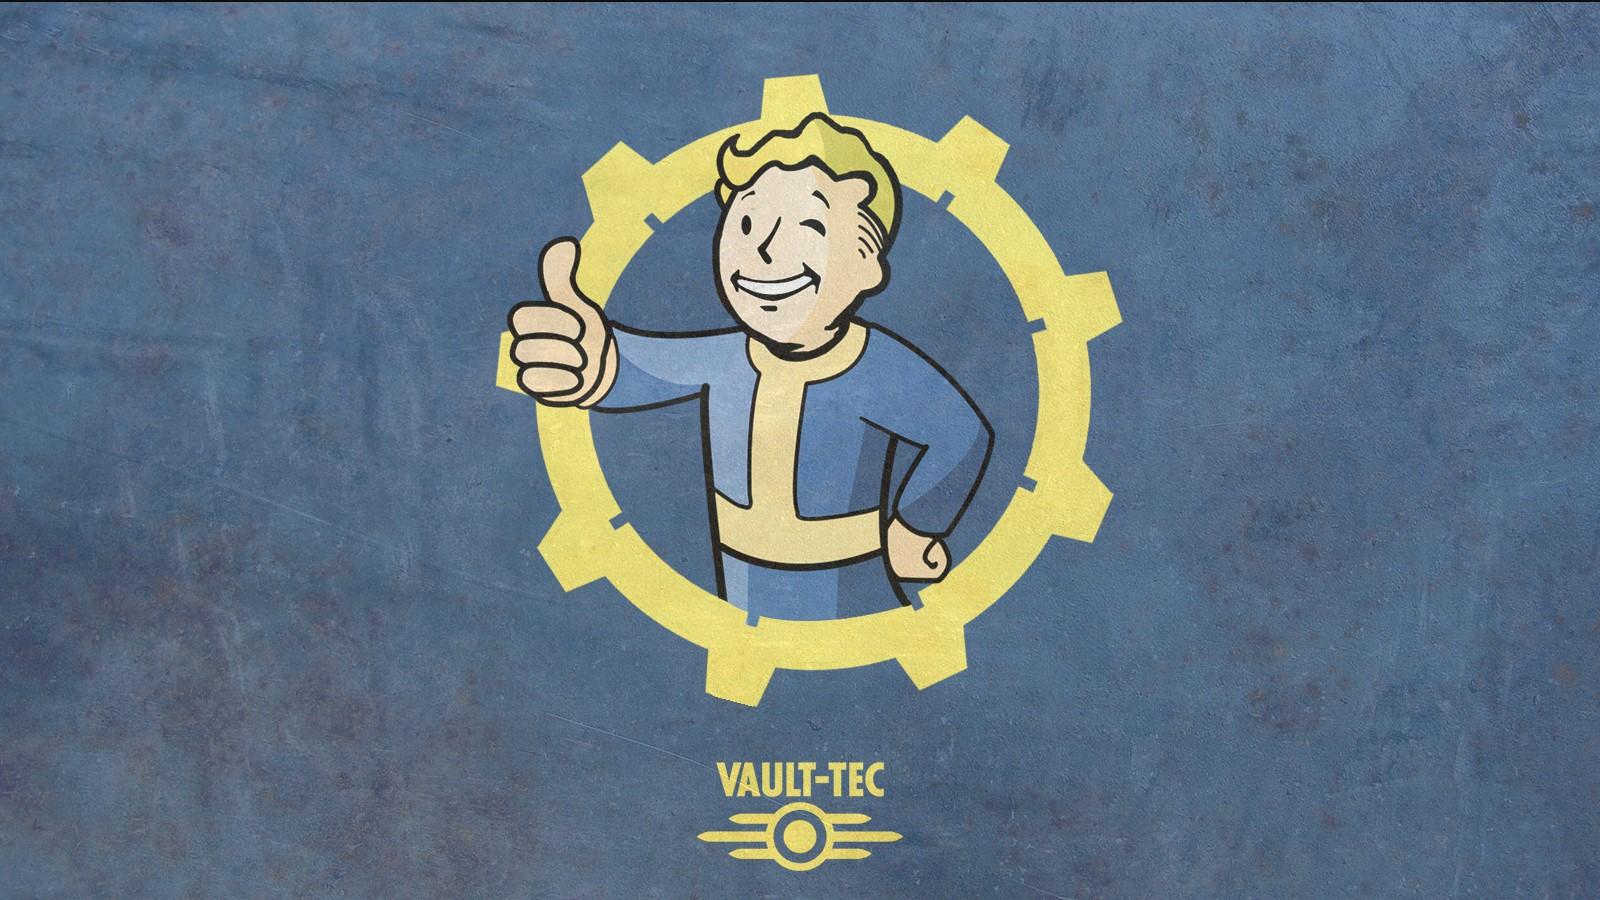 Vault-Tec mascot from Fallout